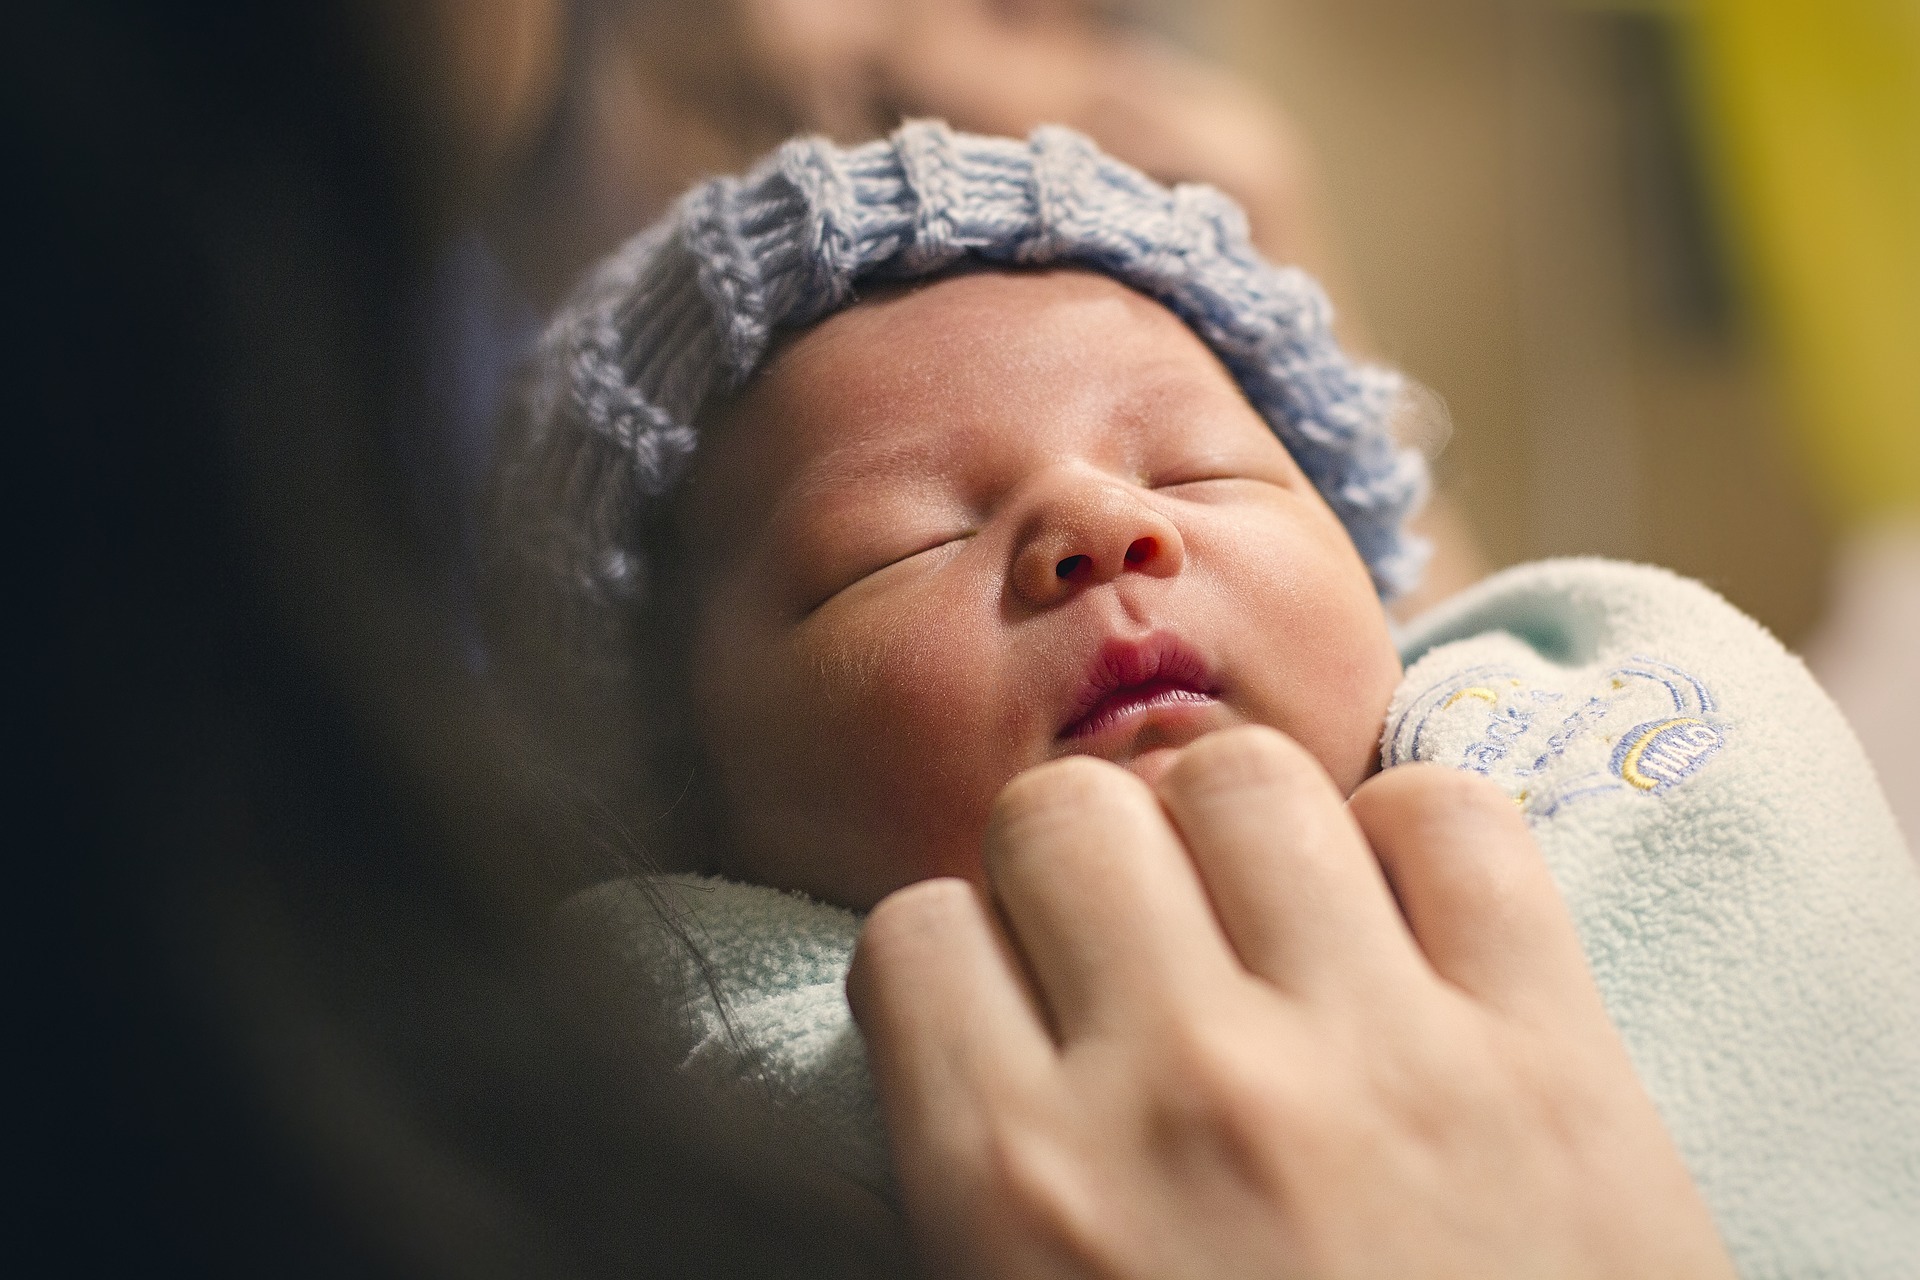 newborn baby gas symptoms